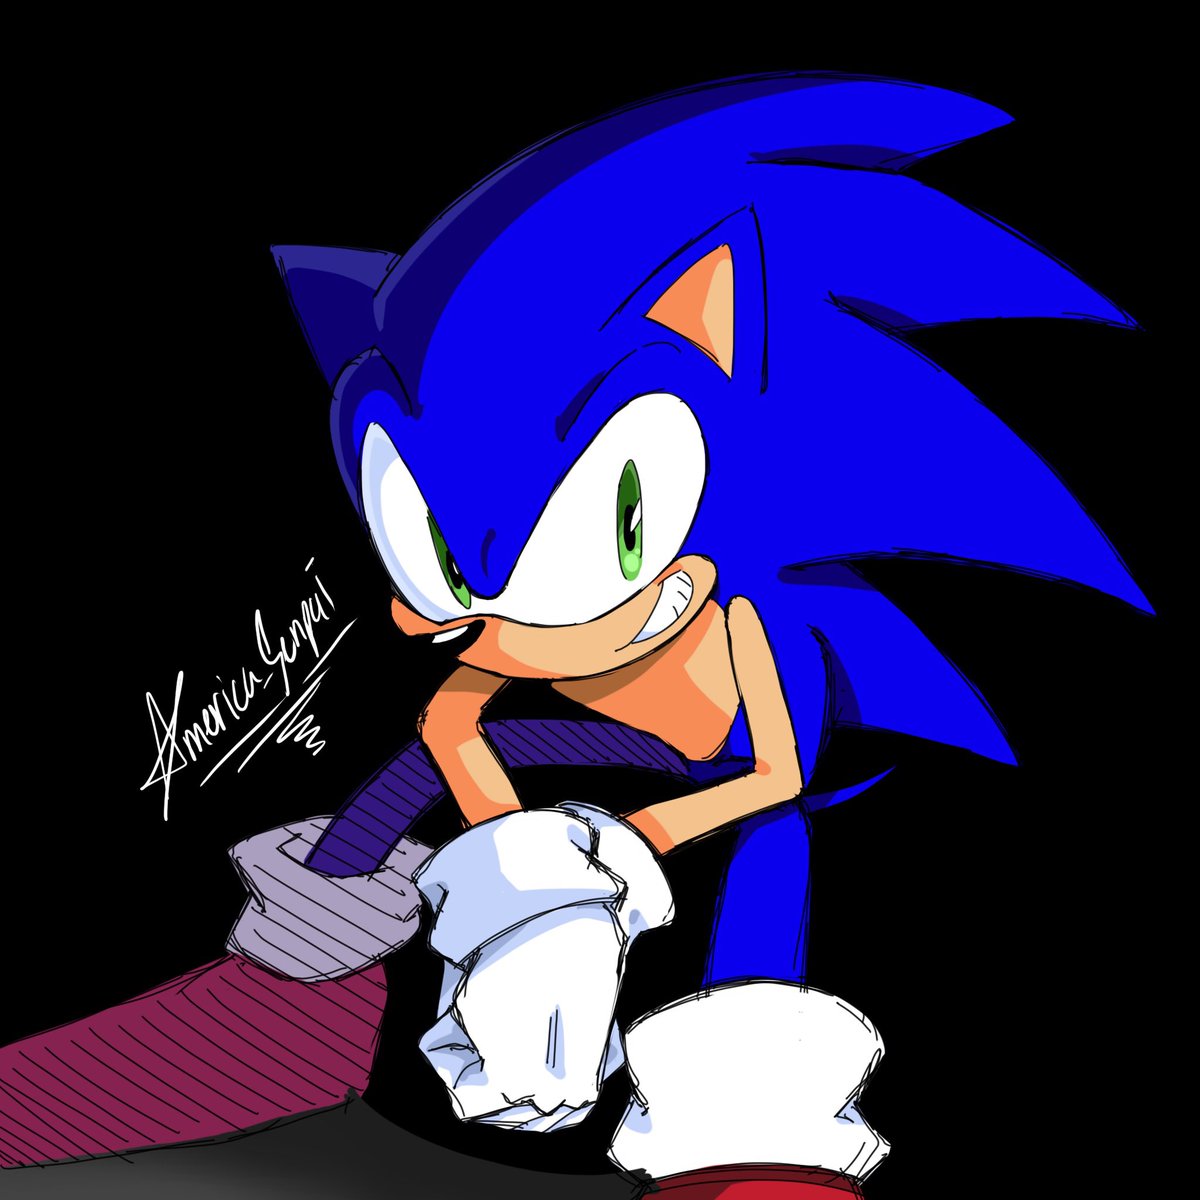 Doodle based on @NaotoOhshima sketches

#SonicTheHedgehog
#Sonic 